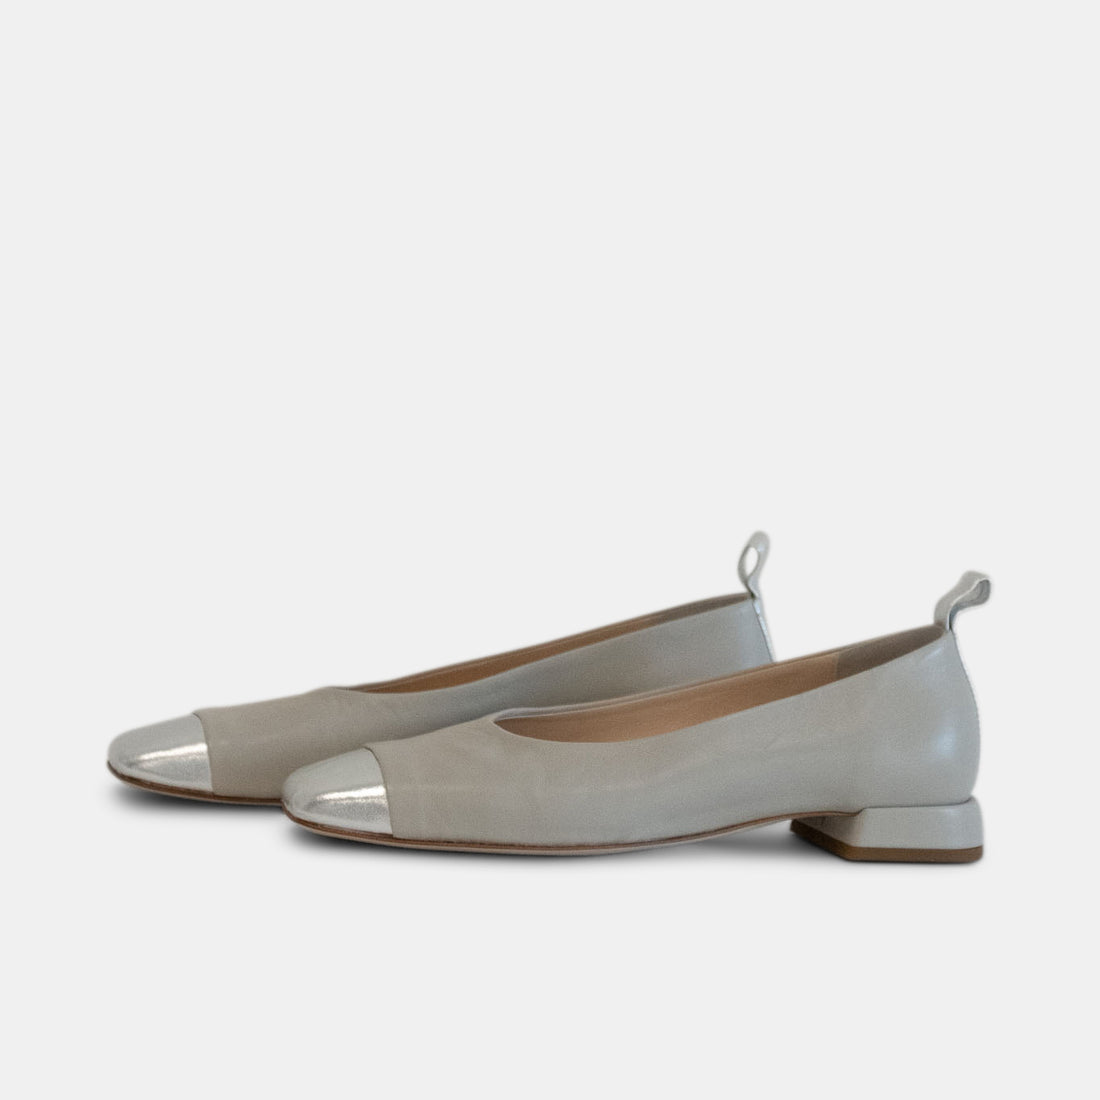 Contrast Toe Pump Gray/Silver - Sample Size 37